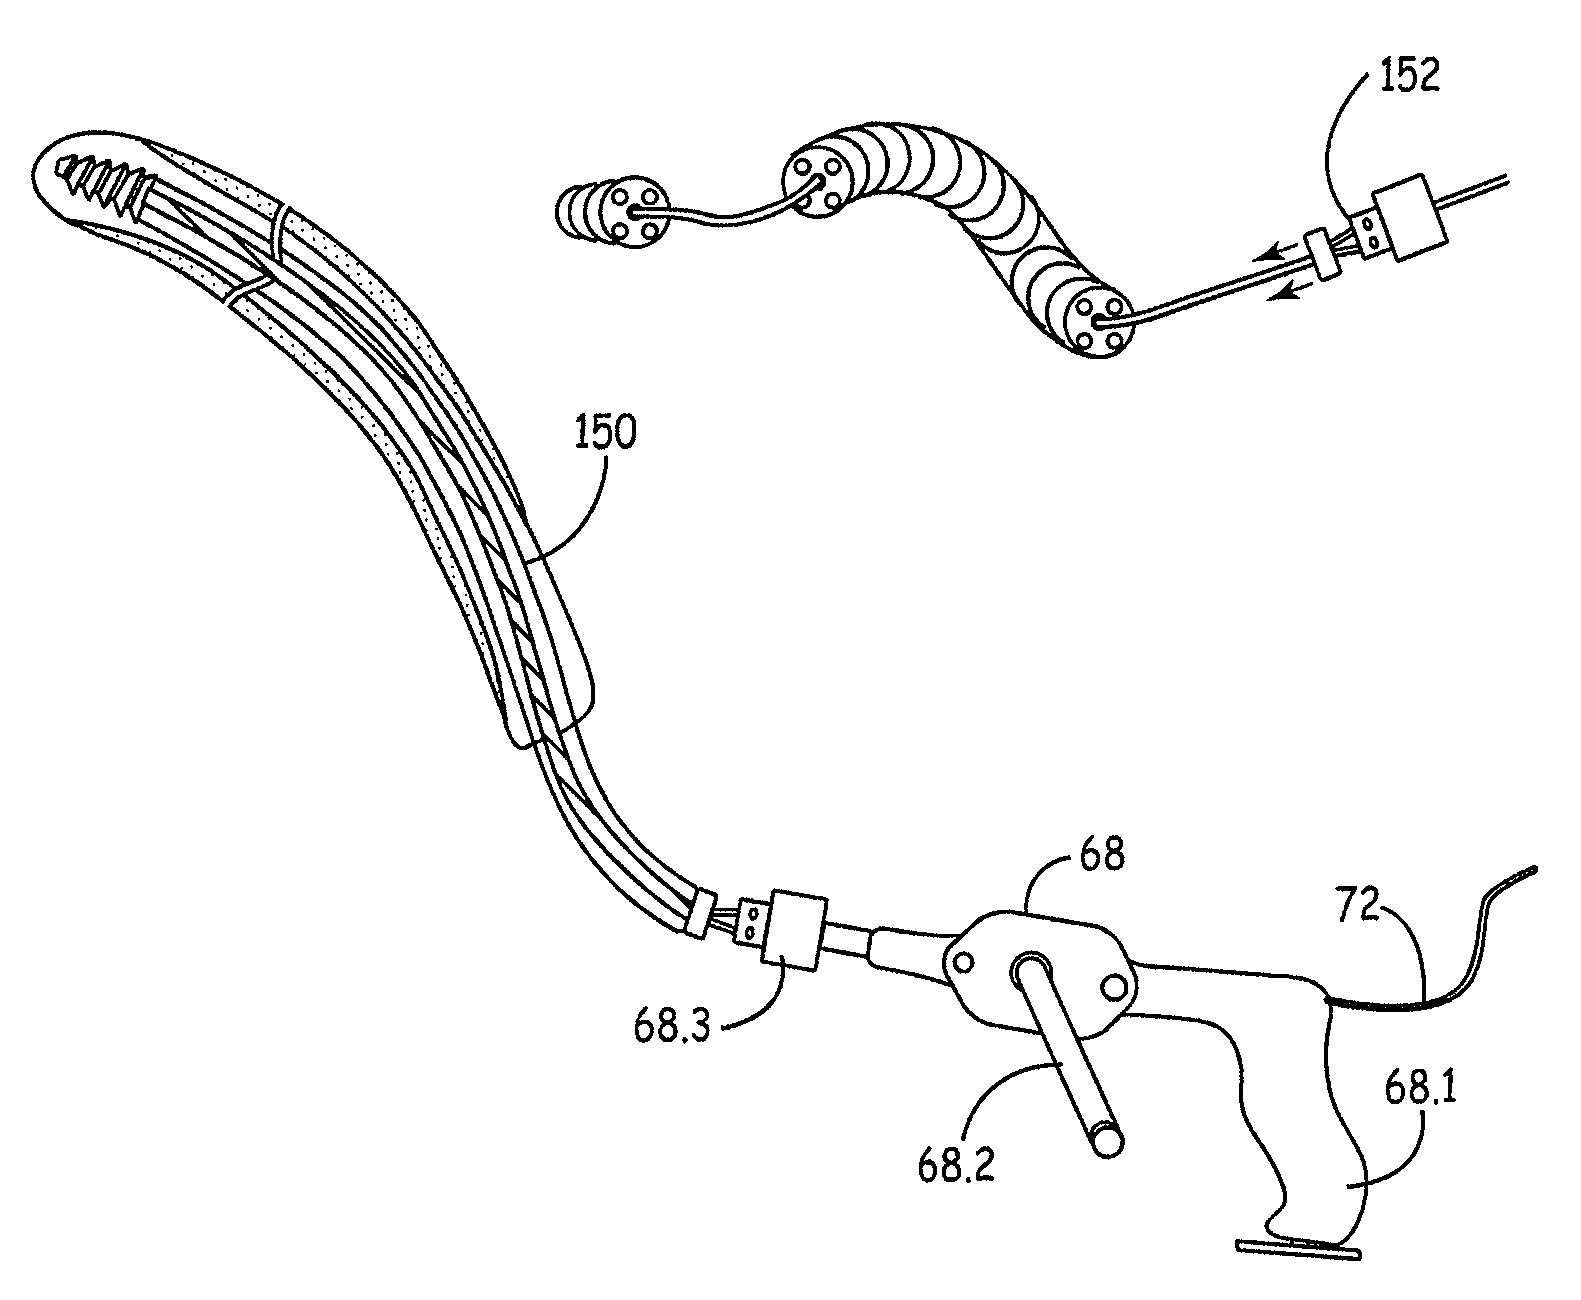 Internal cord fixation device